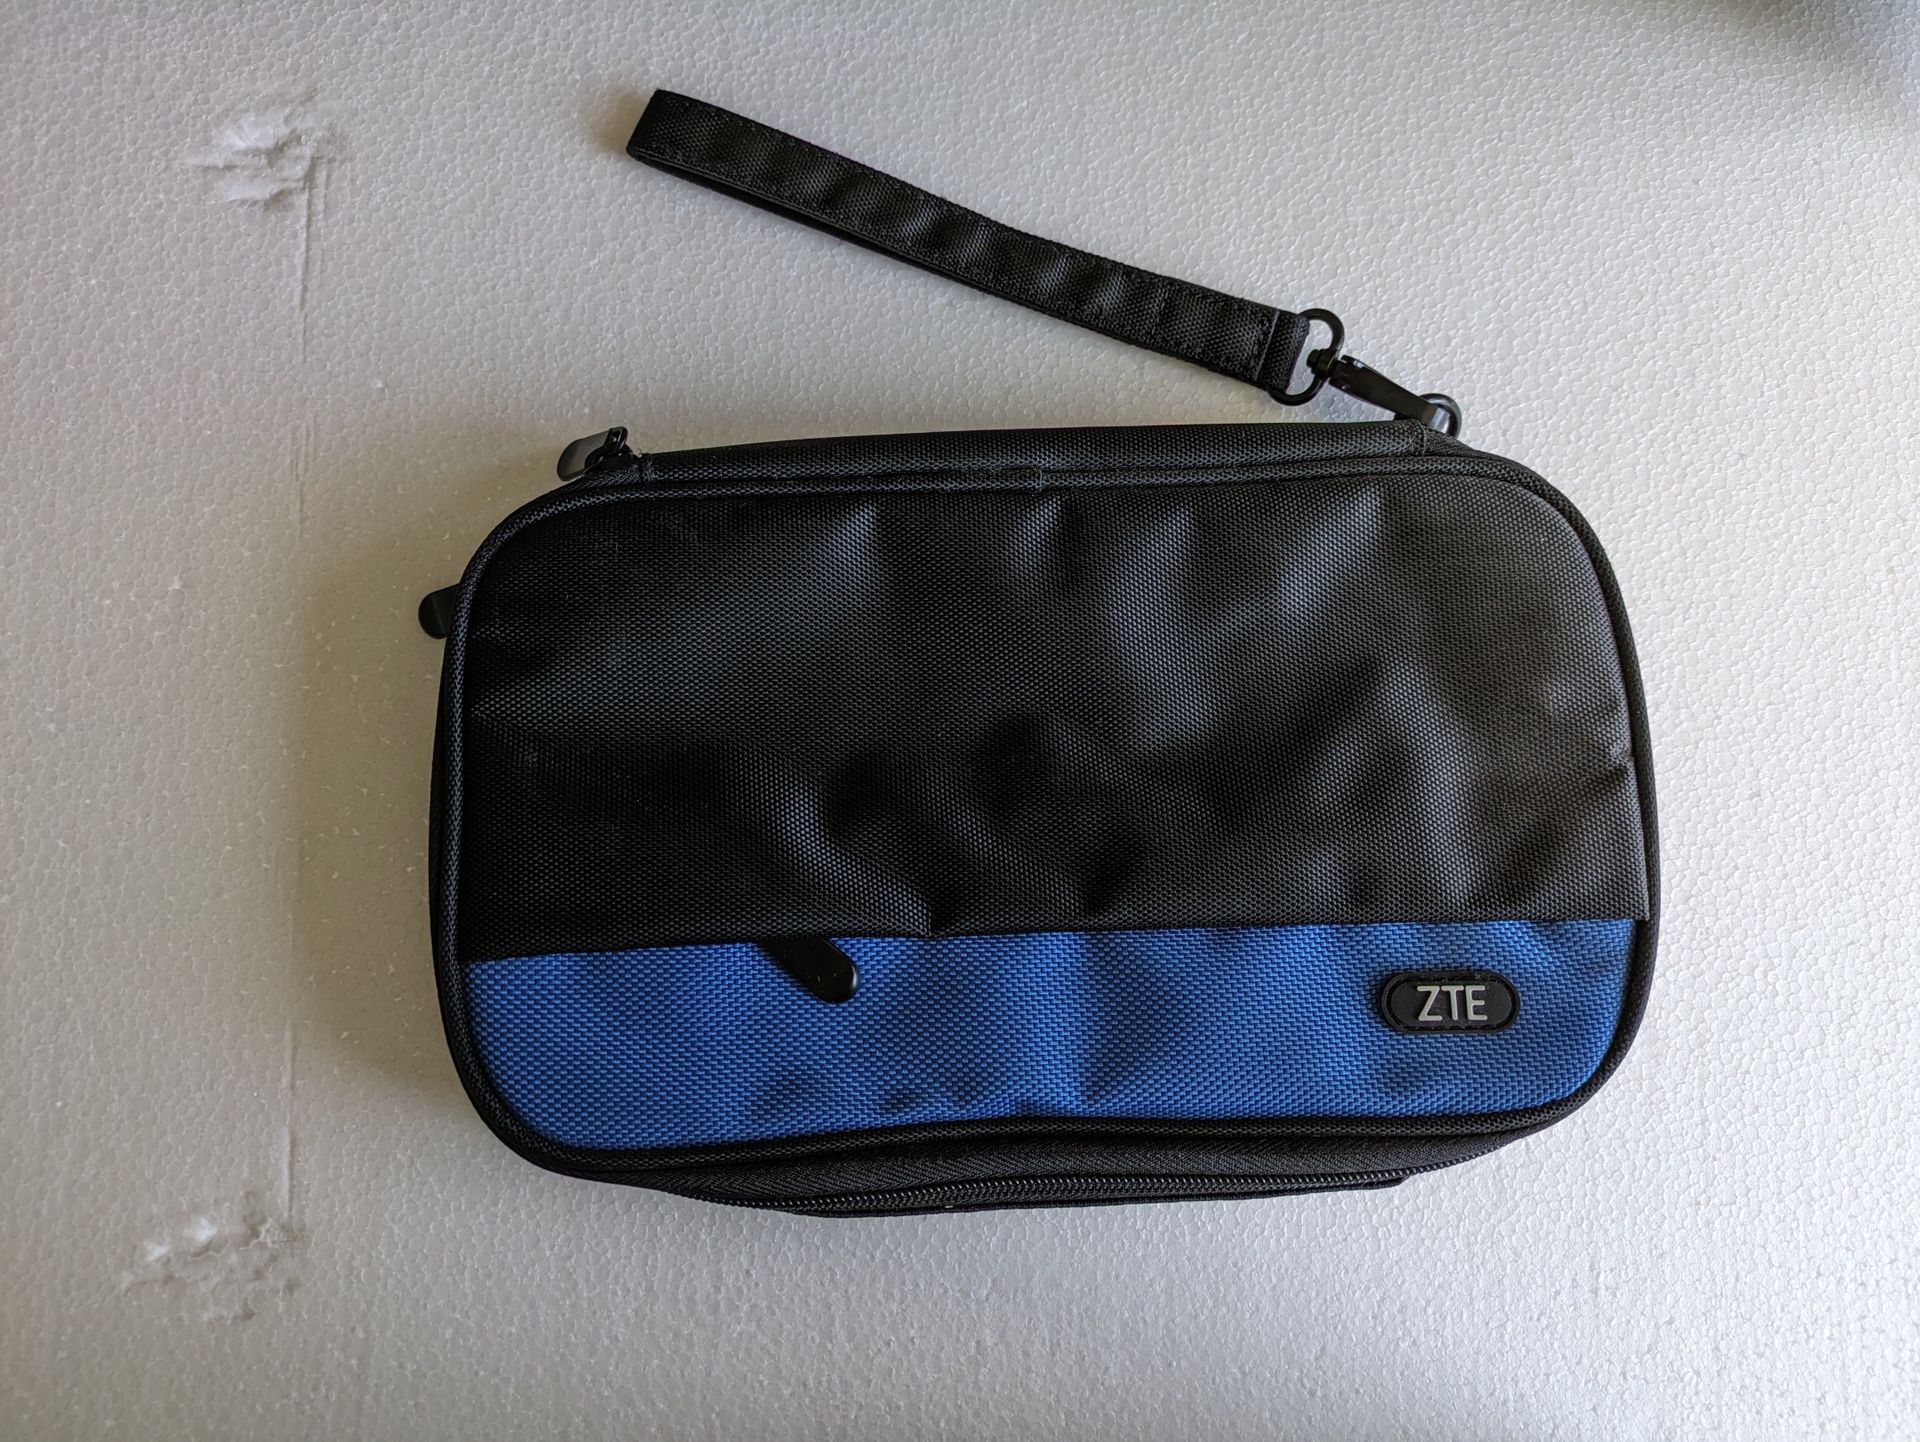 Protective Heavy Duty Nylon Bag with Strap for iPad Mini Kindle tablet